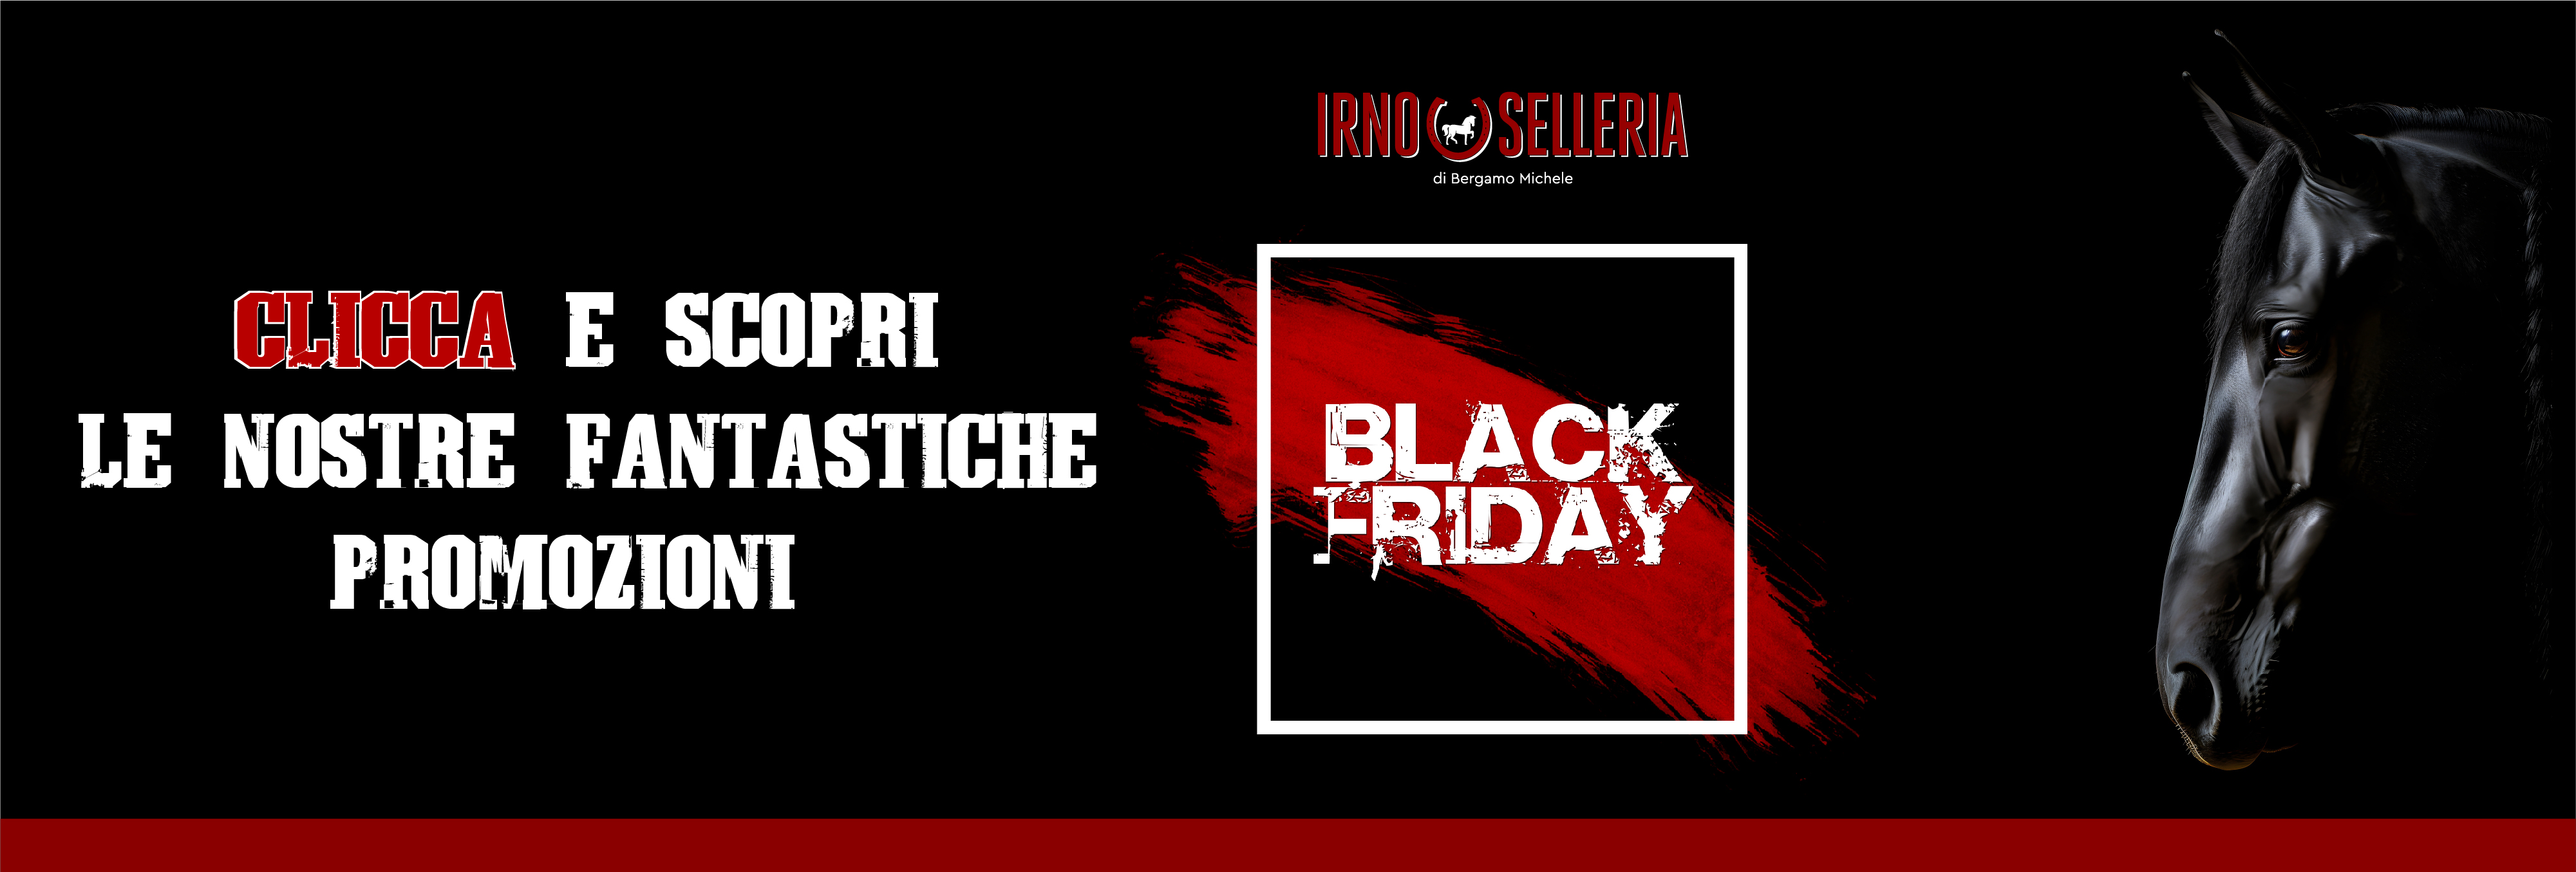 Promo Black Friday